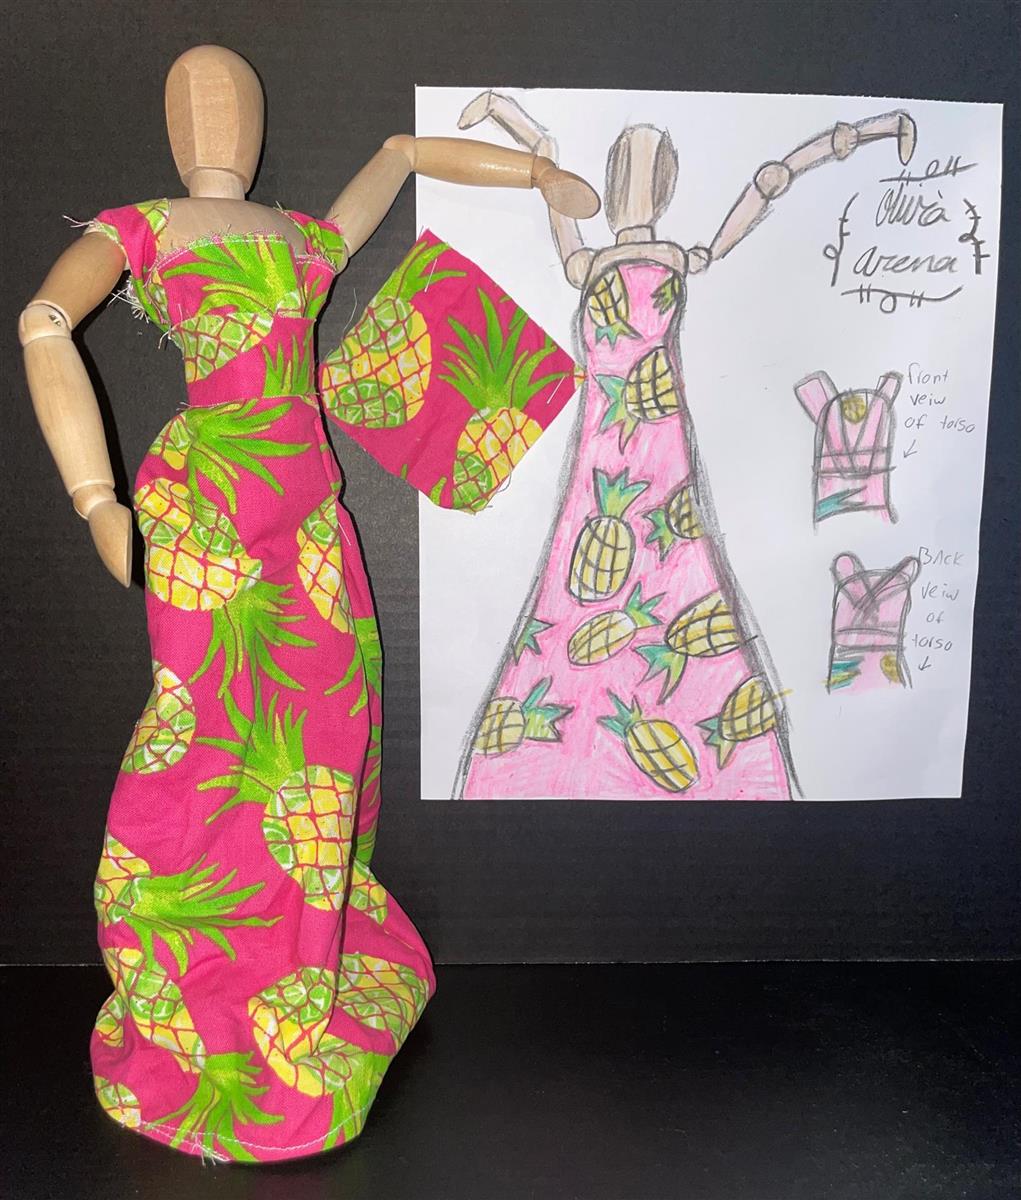 Pineapple Dress Design - Olivia Arena, Pembroke, MA - Cover Art